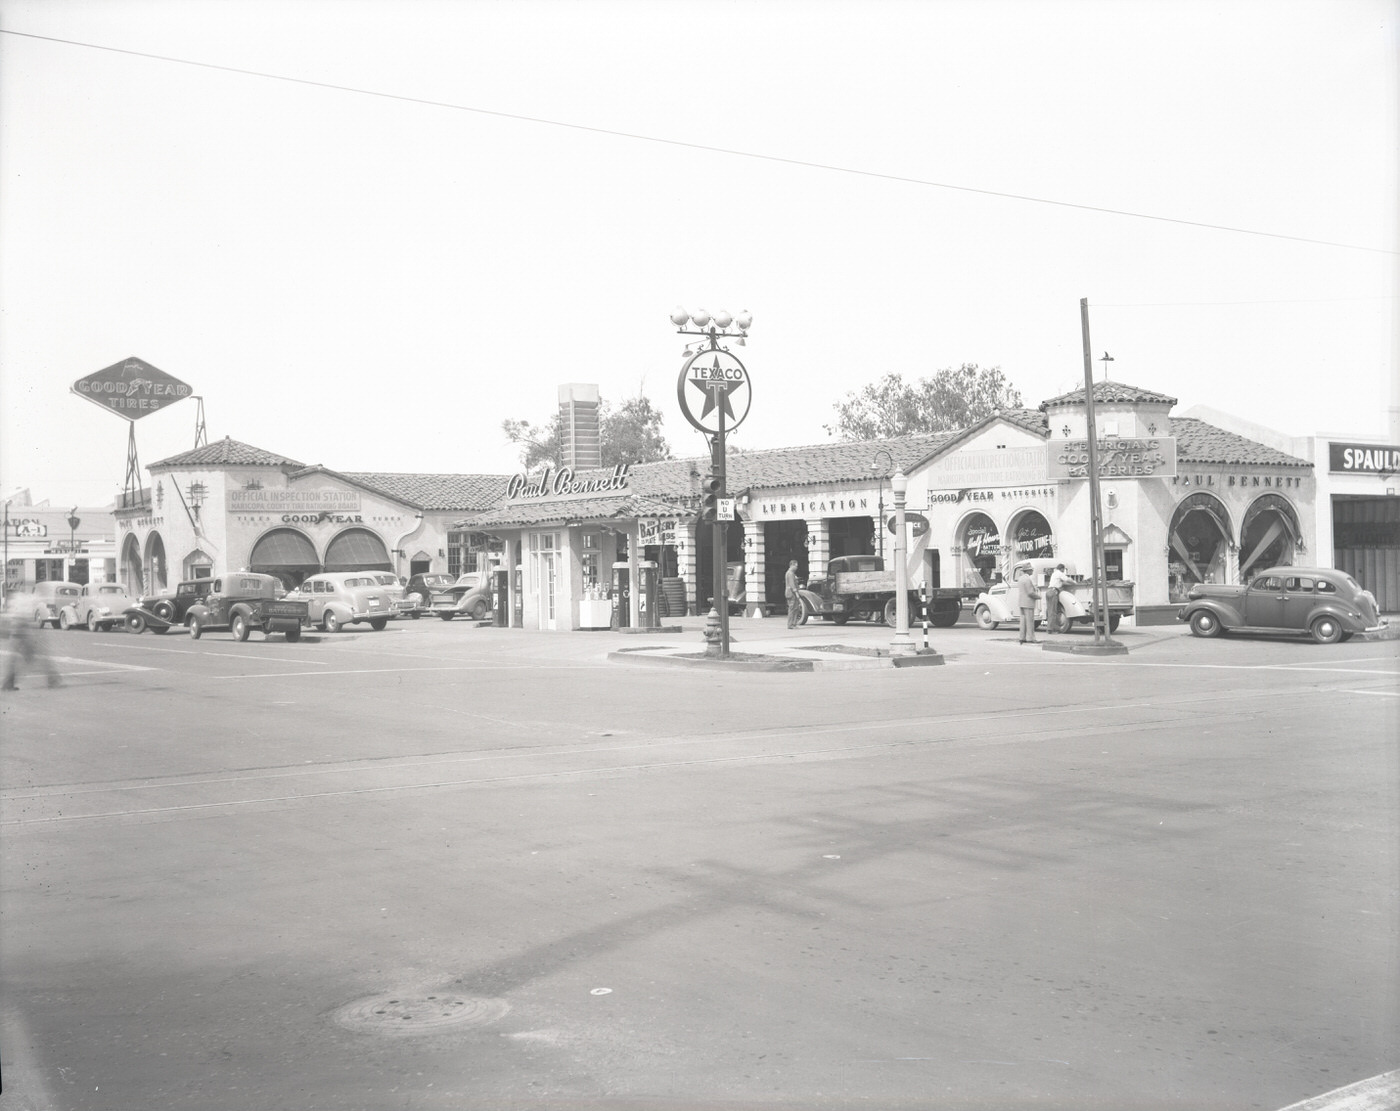 Paul Bennett Super Service Station Exterior, 1943